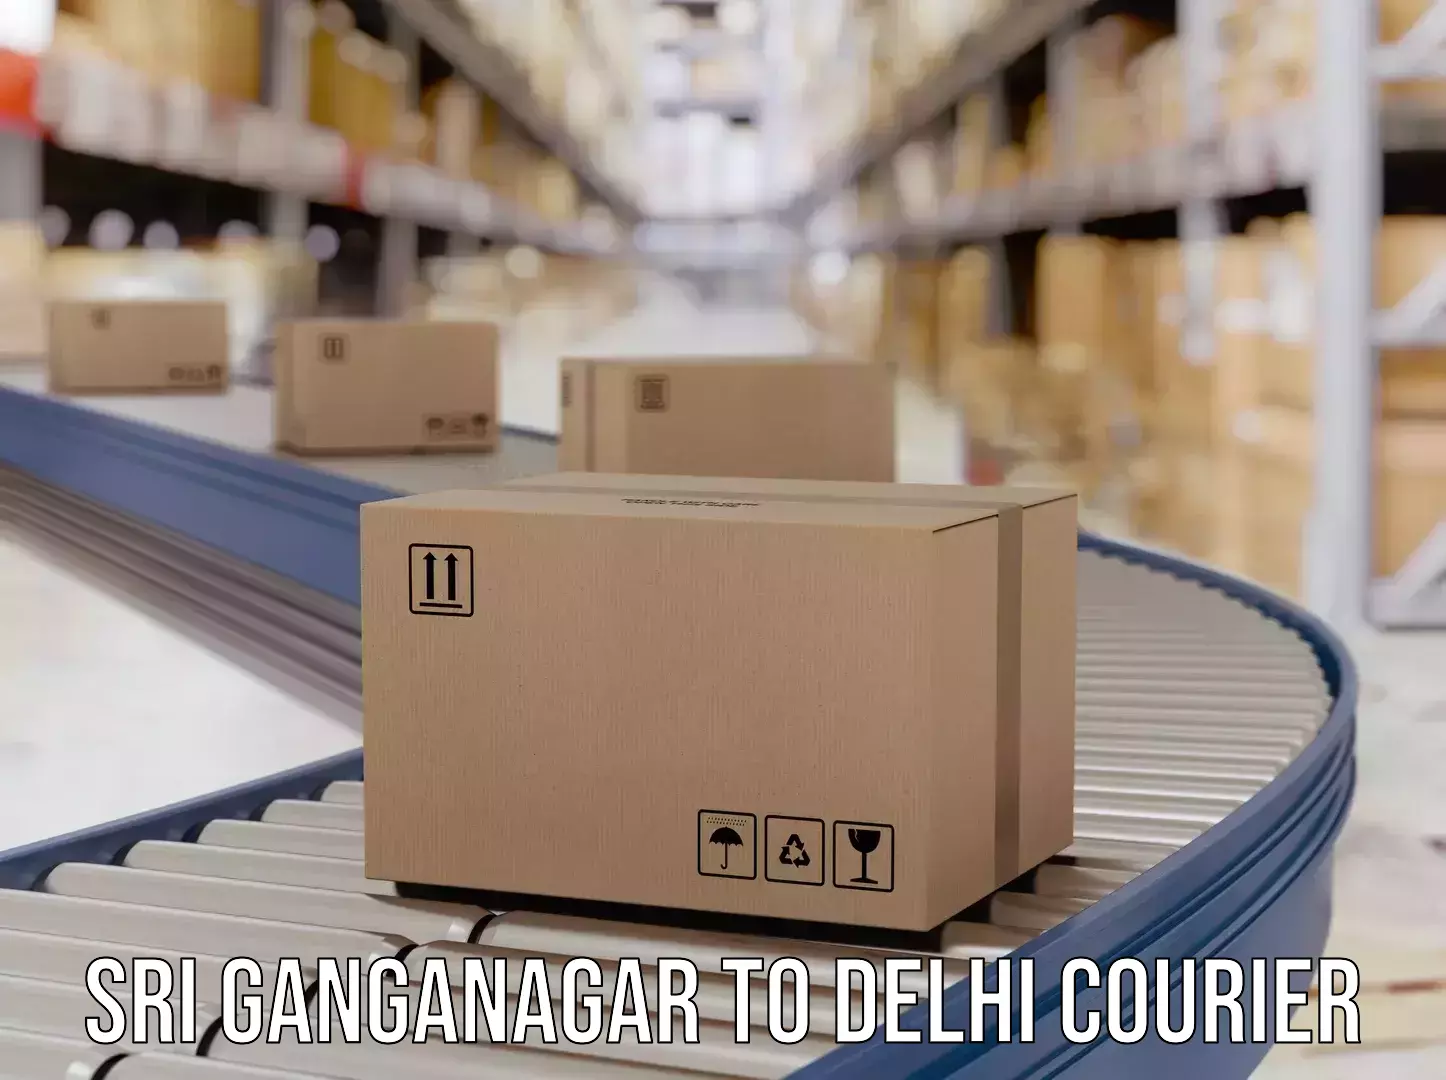 Customer-focused courier Sri Ganganagar to University of Delhi